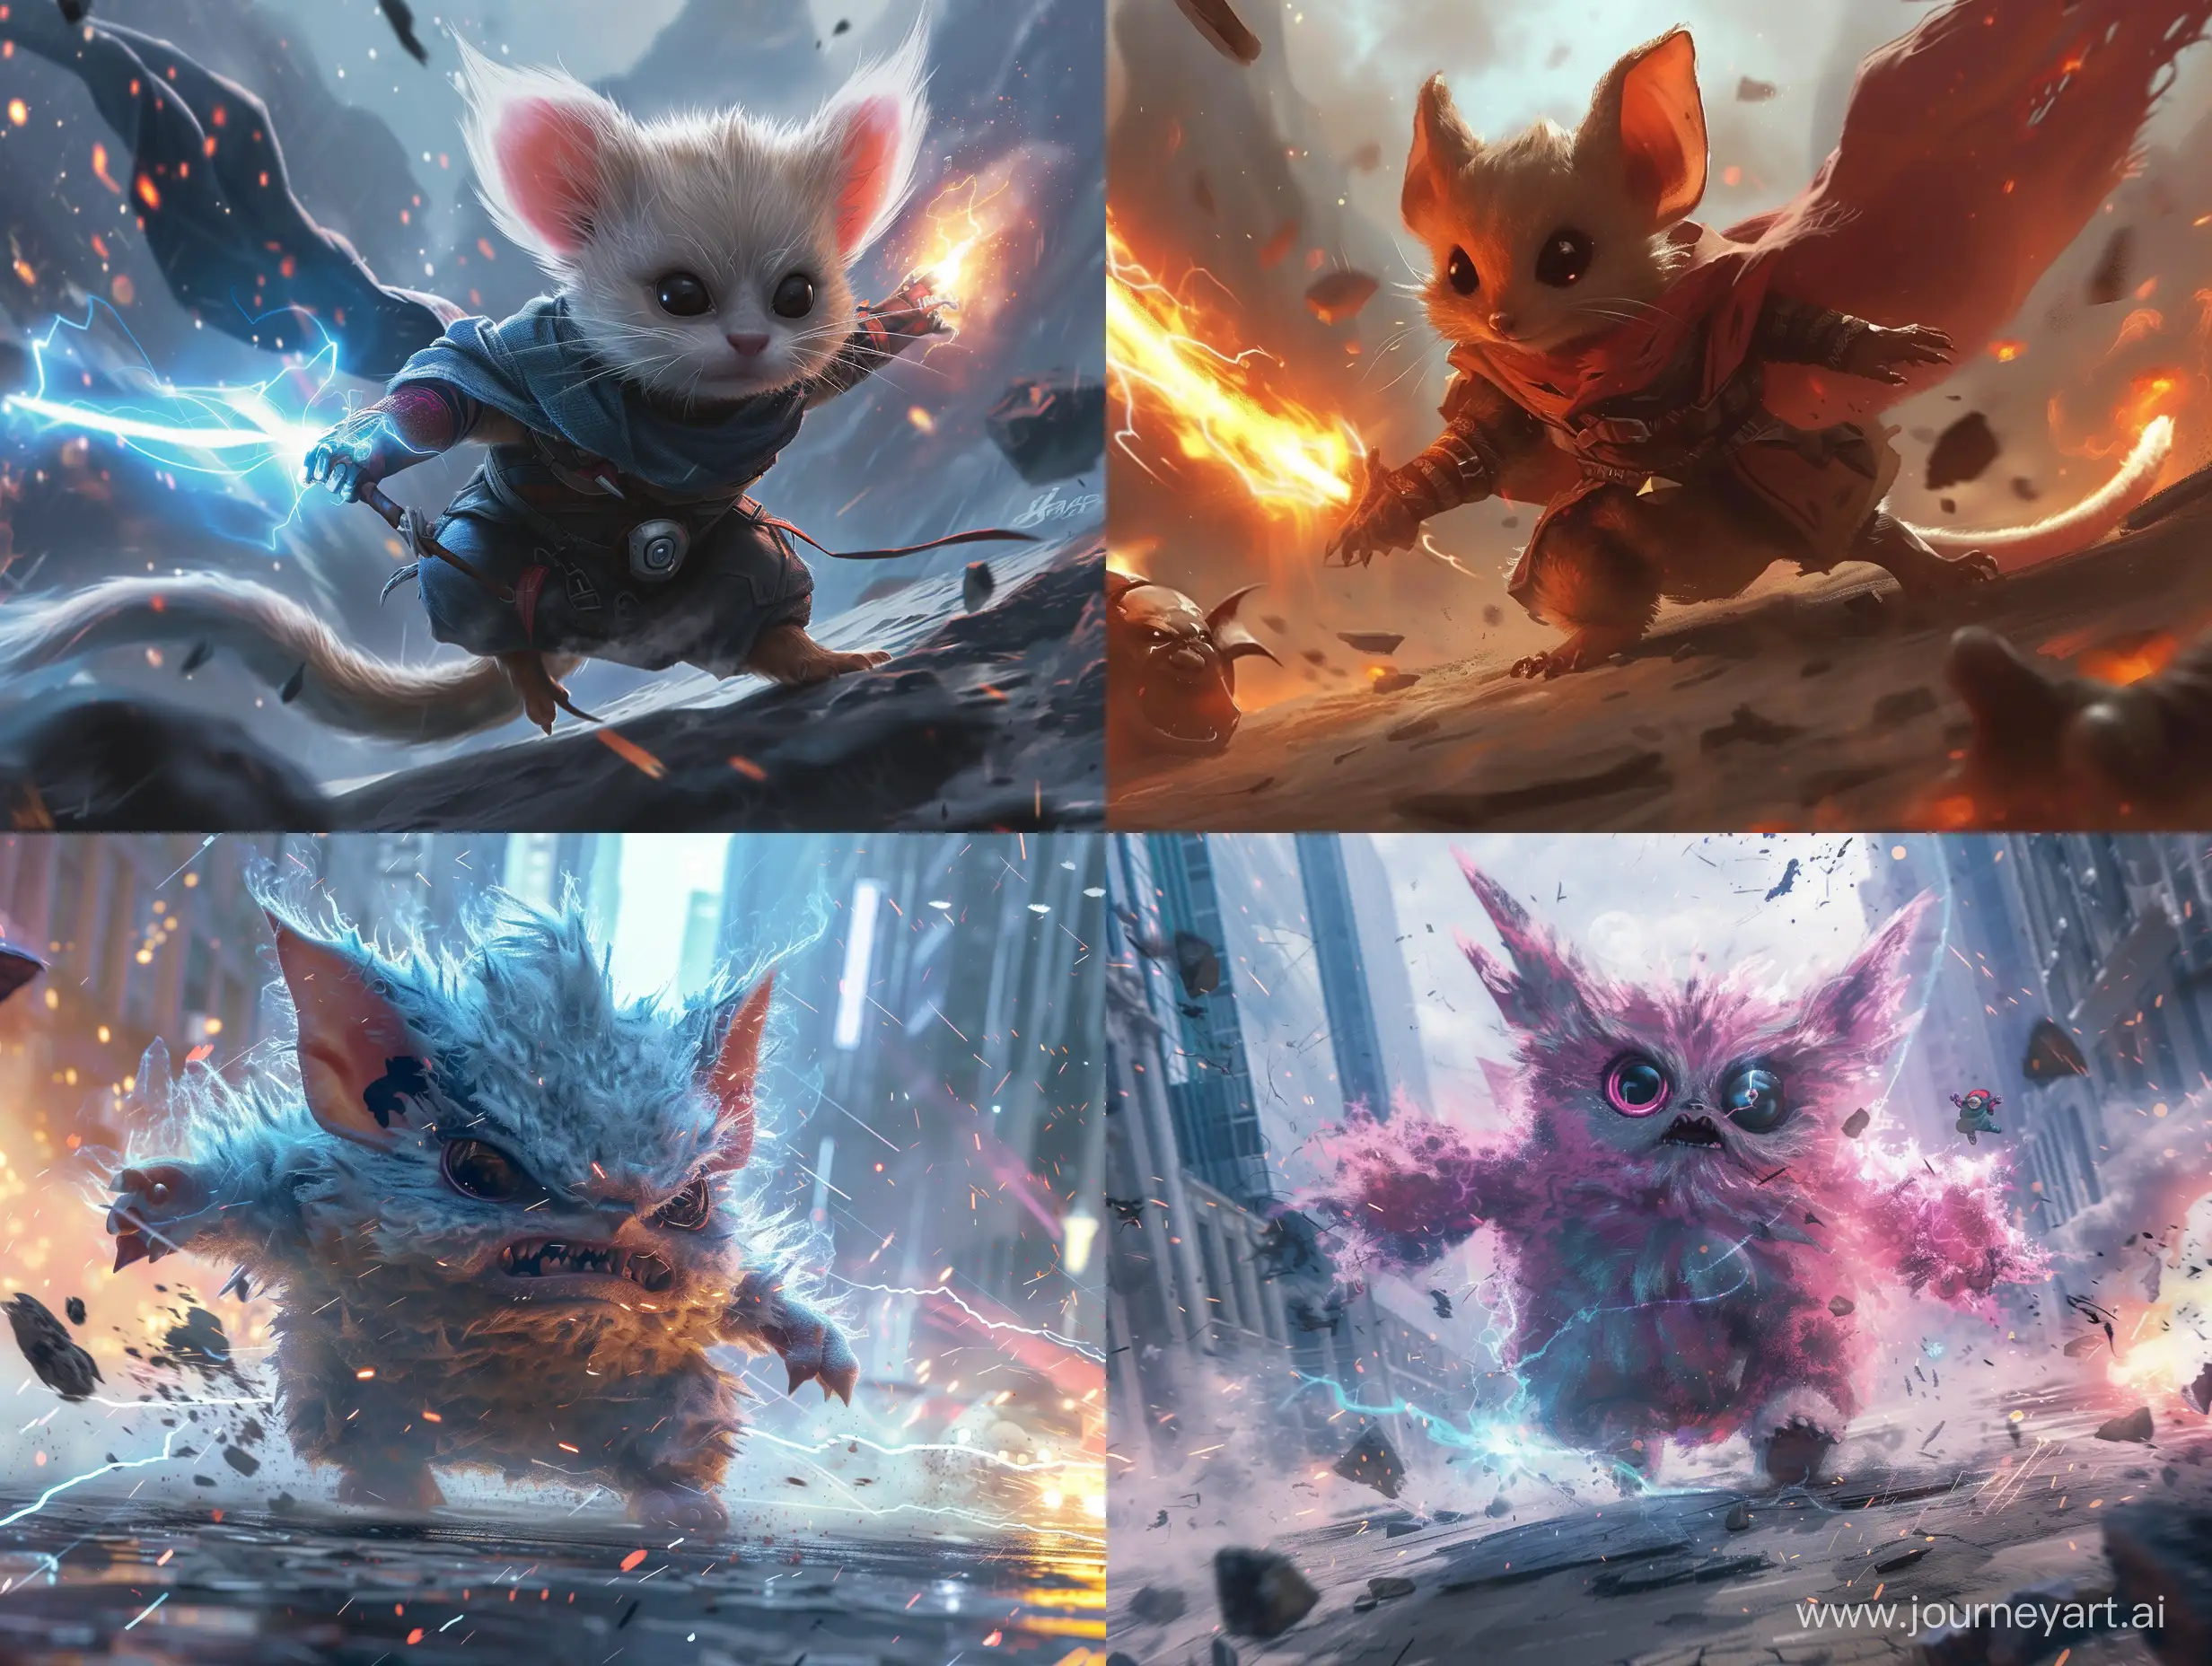 Detailed-Realistic-Cute-Superpowered-Creature-Battles-Badass-Villains